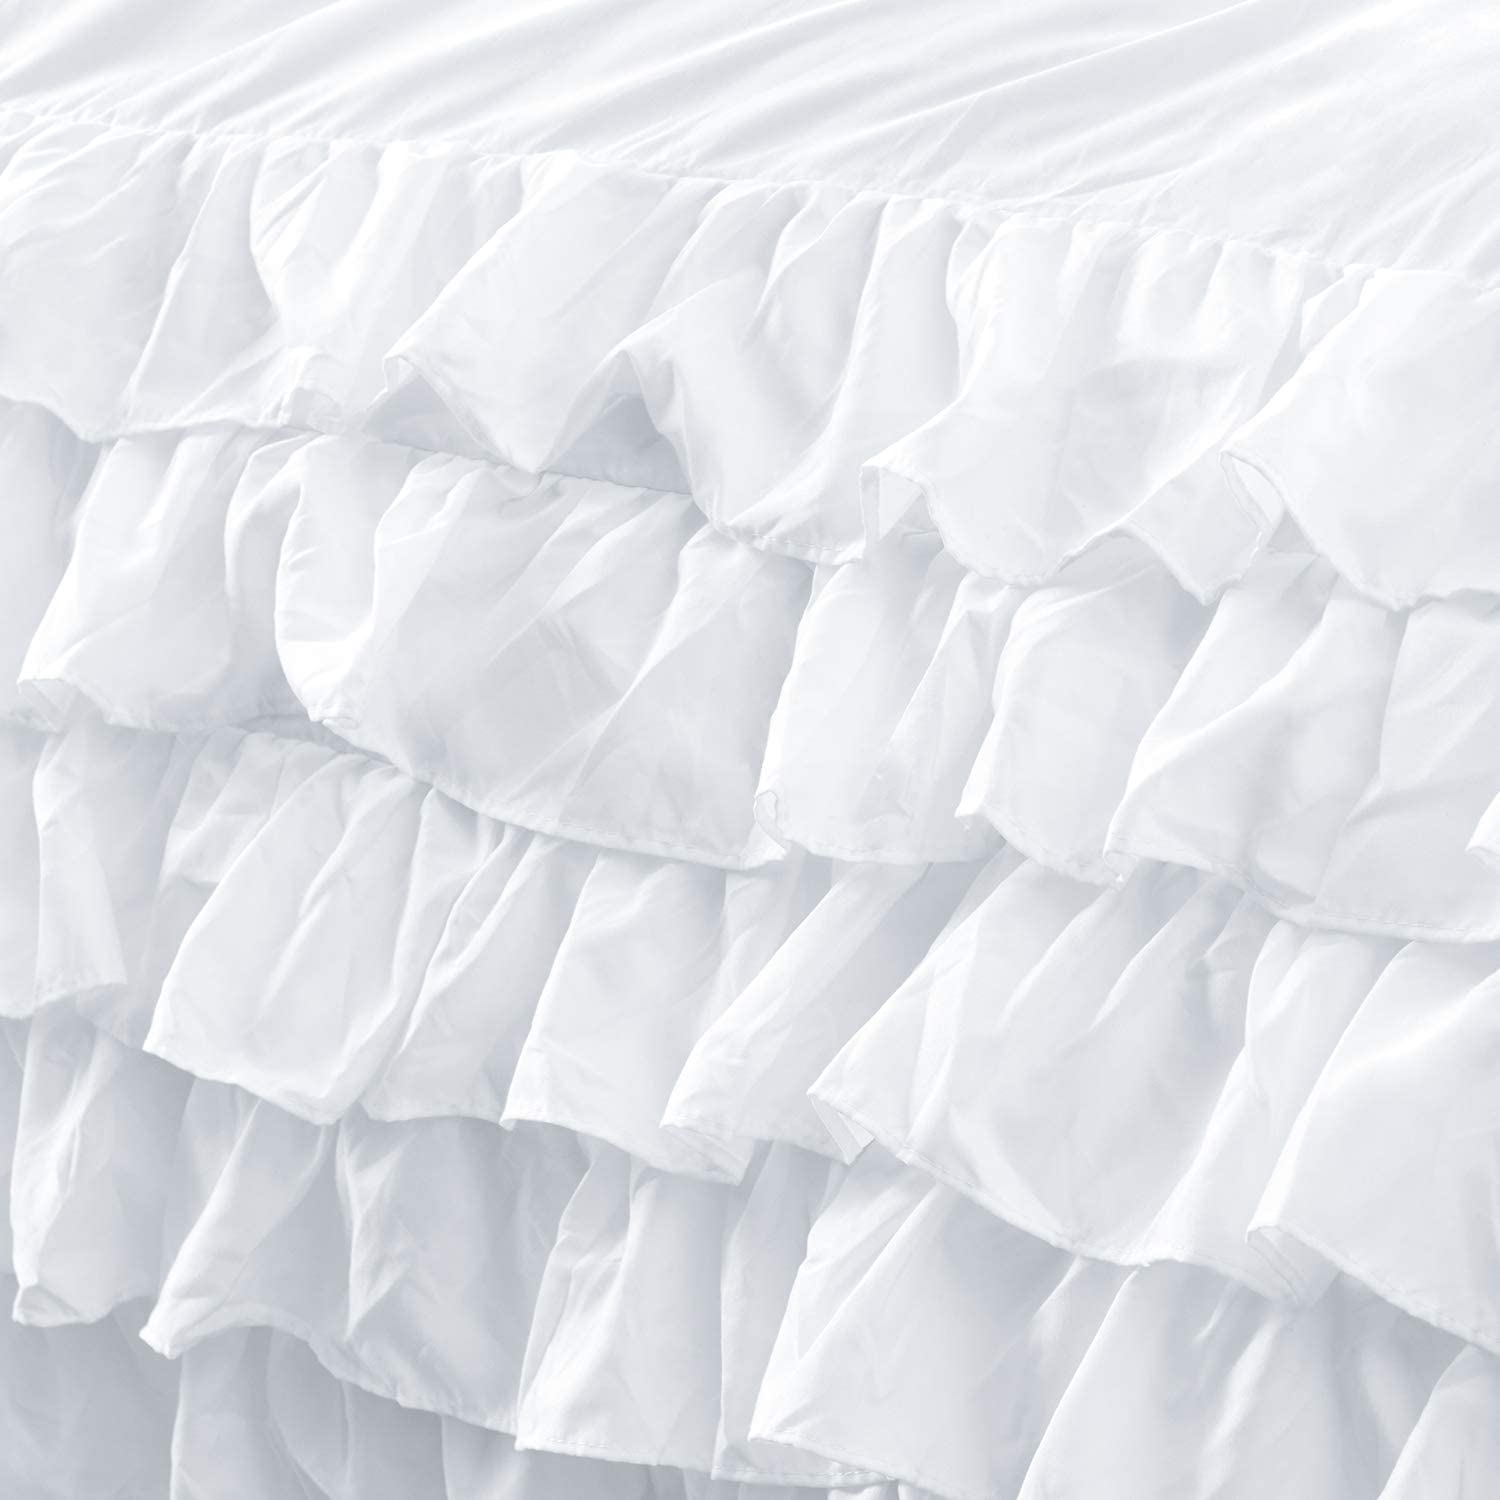 White Ruffle Duvet Cover Breathable Microfiber Bedding Set Zipper Closure